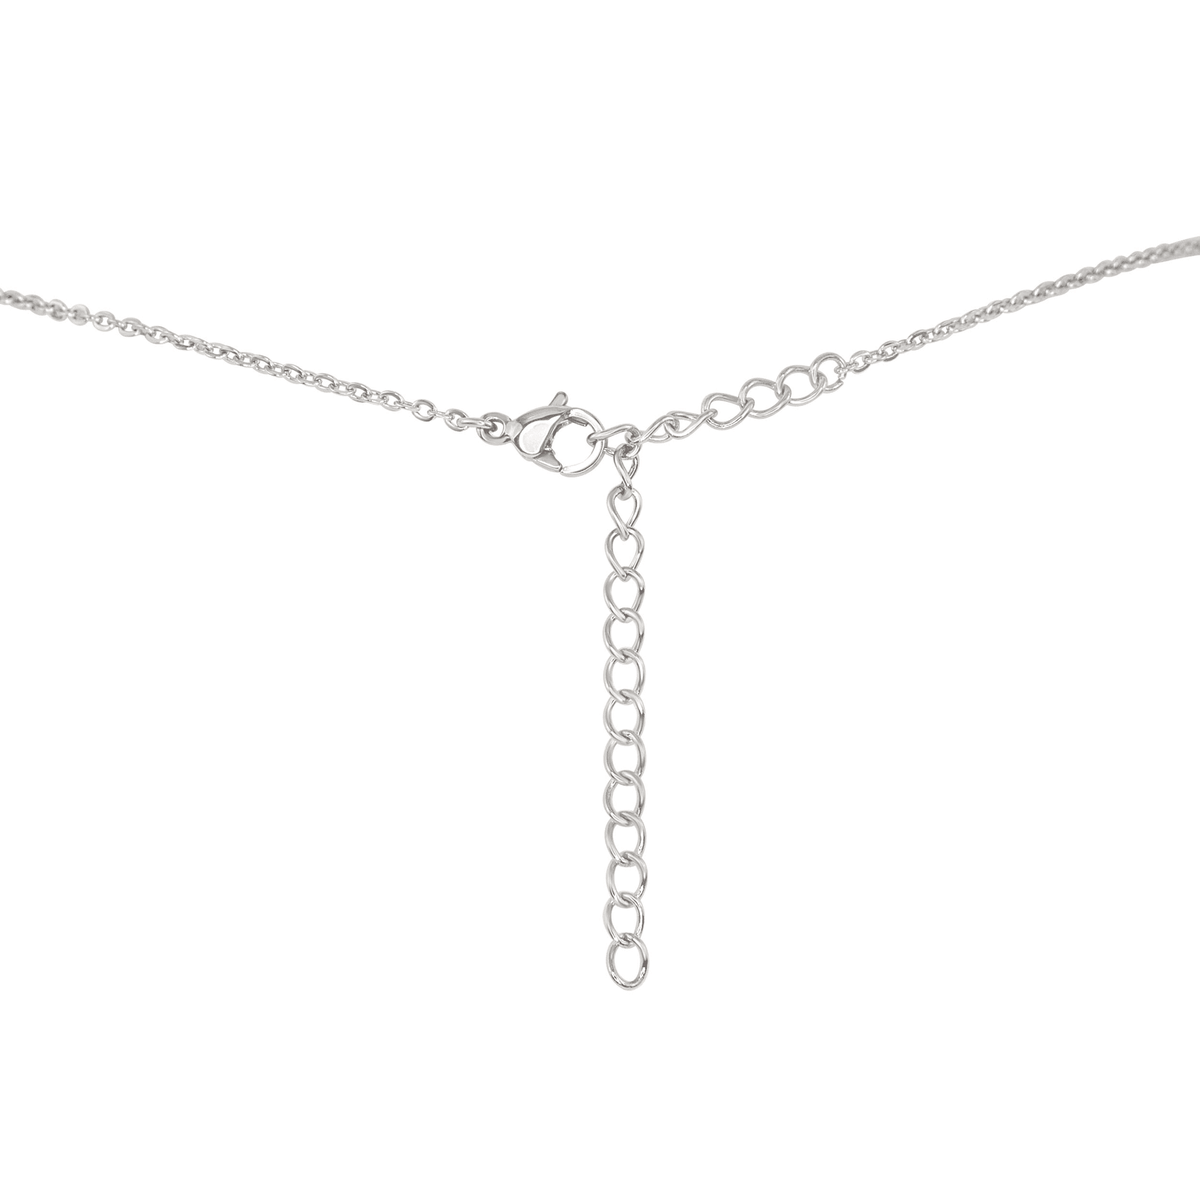 Garnet Boho Lariat Necklace - Garnet Boho Lariat Necklace - 14k Gold Fill - Luna Tide Handmade Crystal Jewellery